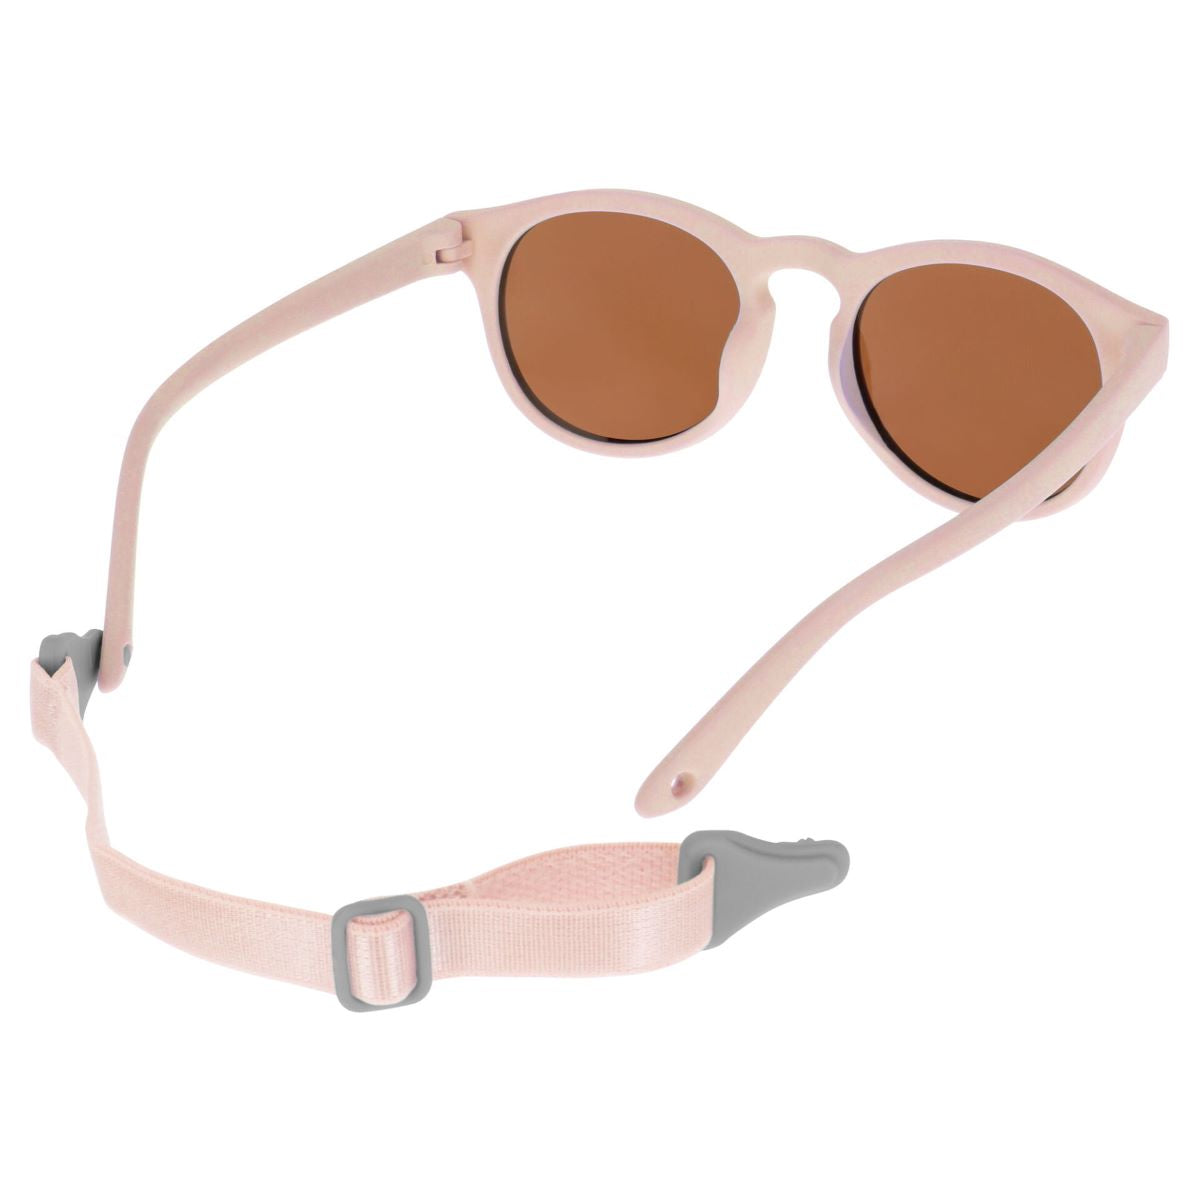 Dooky Sunglasses Aruba (Pink)